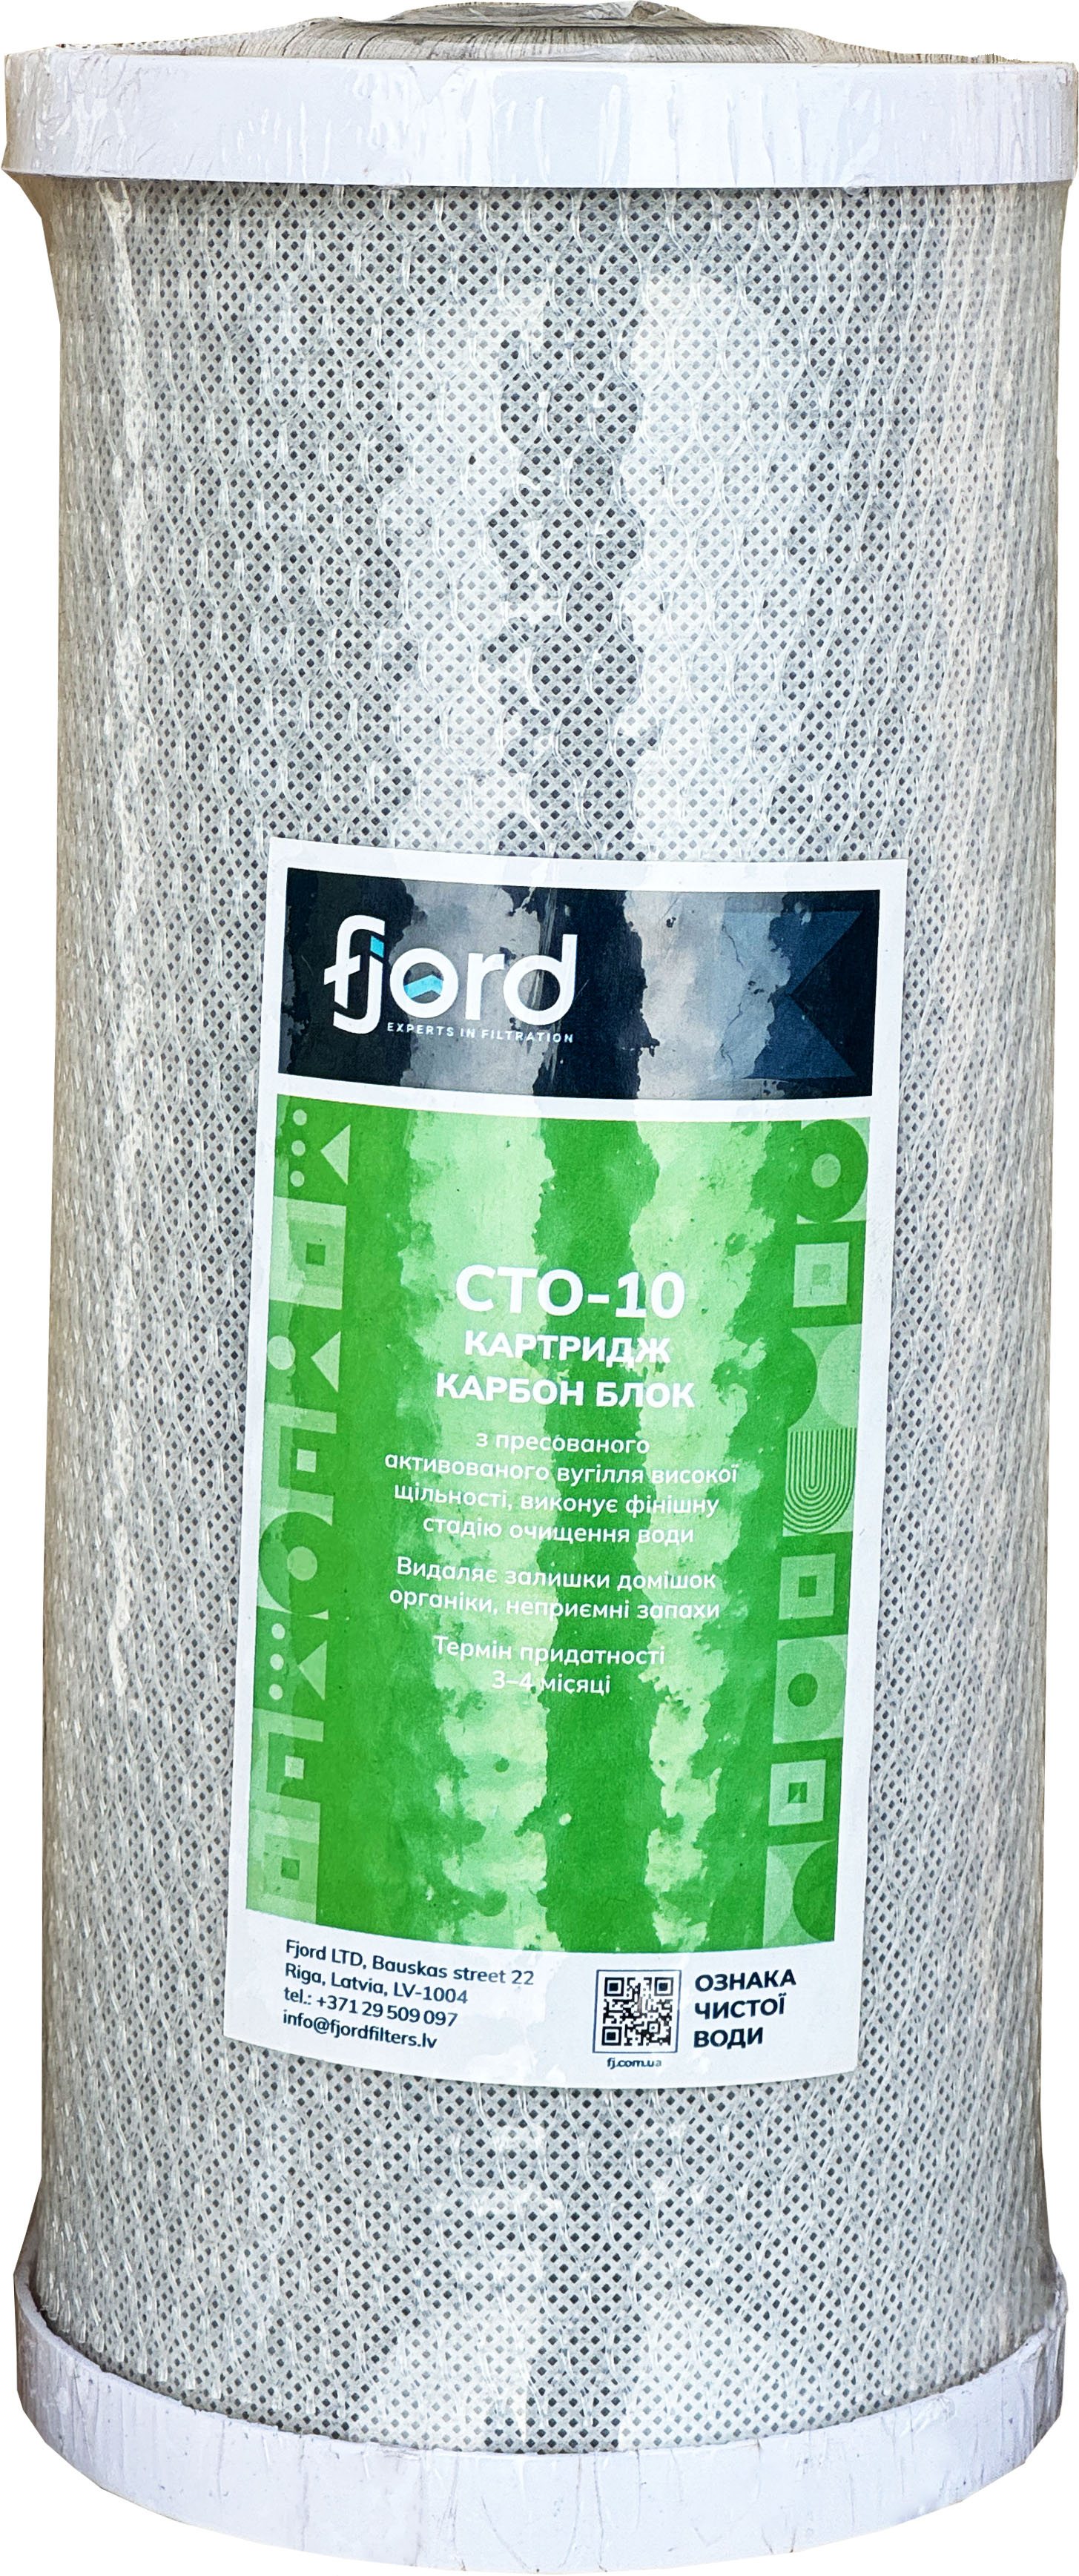 Fjord CTO-BB10 (уголь)